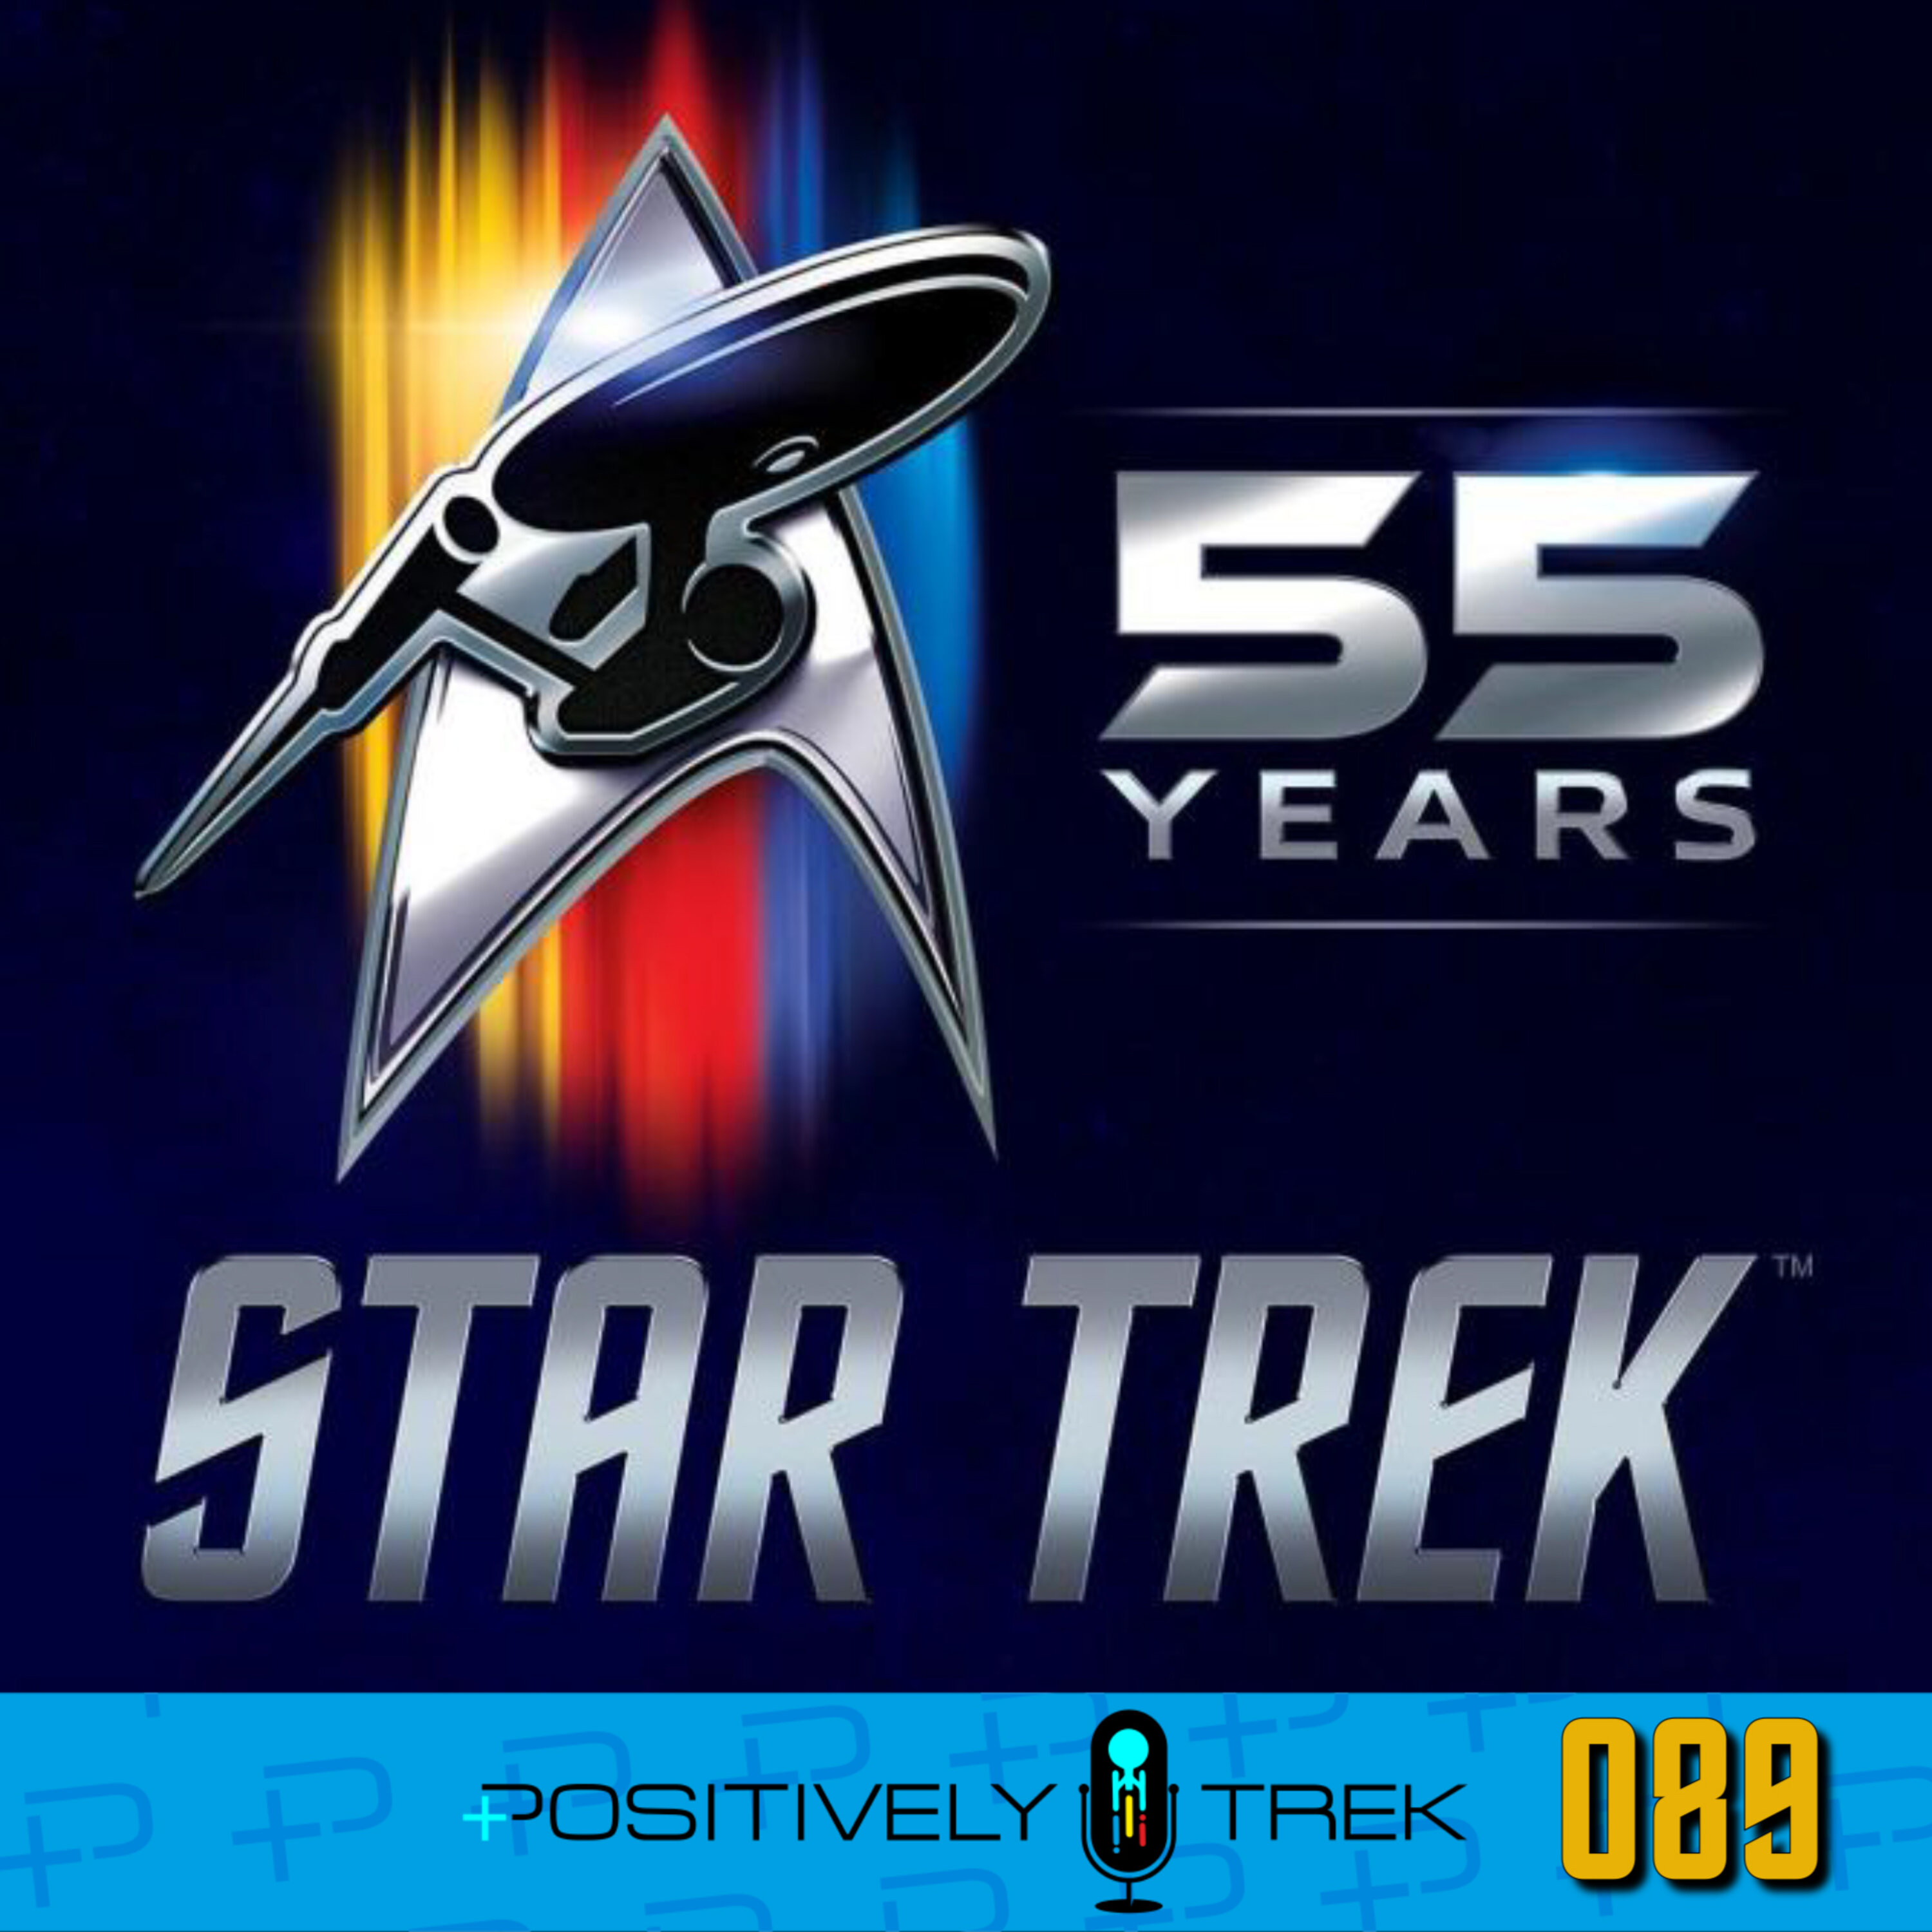 Star Trek’s 55th Anniversary & New Books Added to the 2021 Image